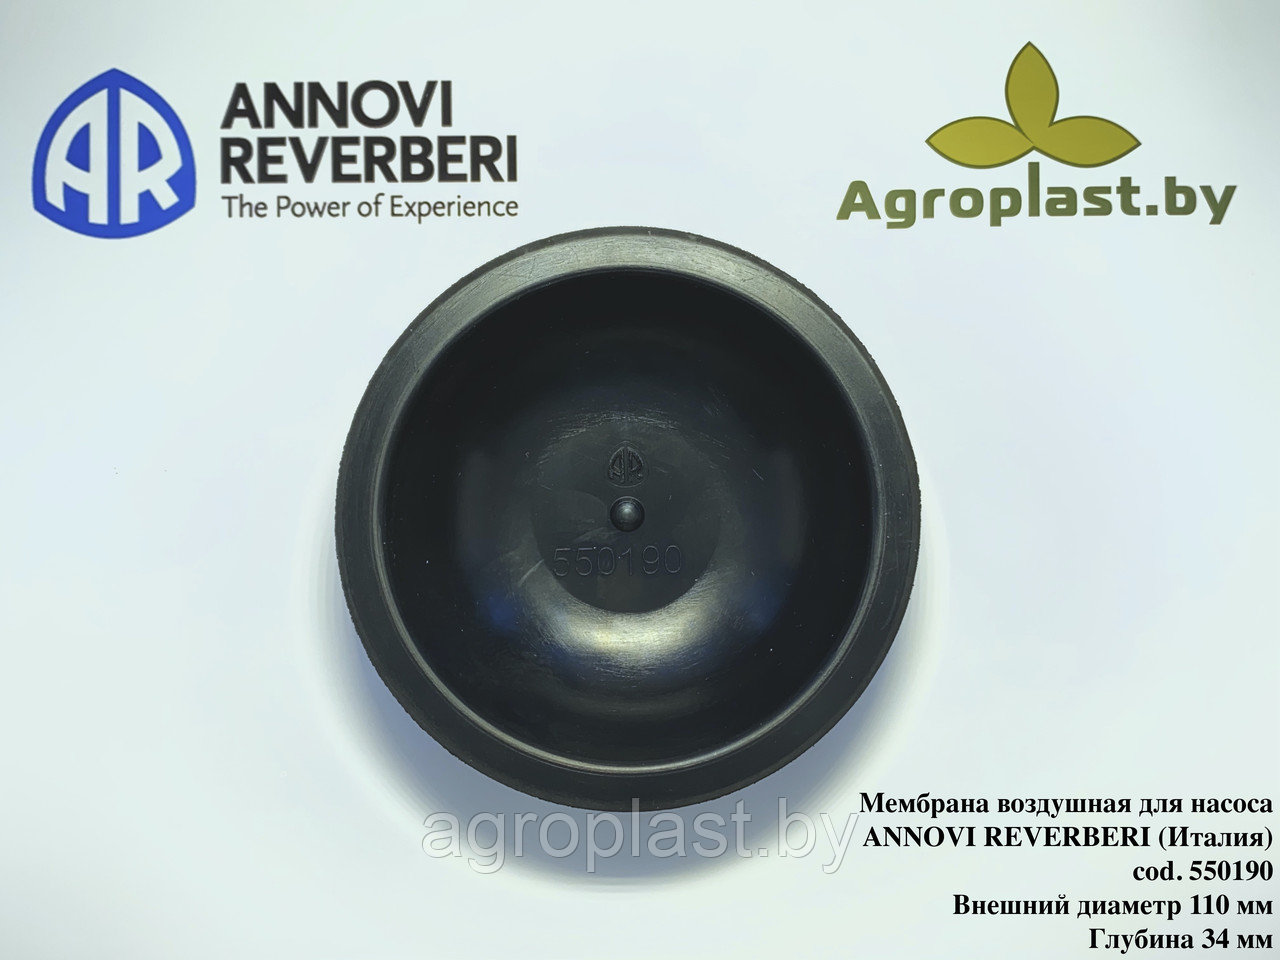 Мембрана воздушная для насоса Annovi Reverberi cod.550190